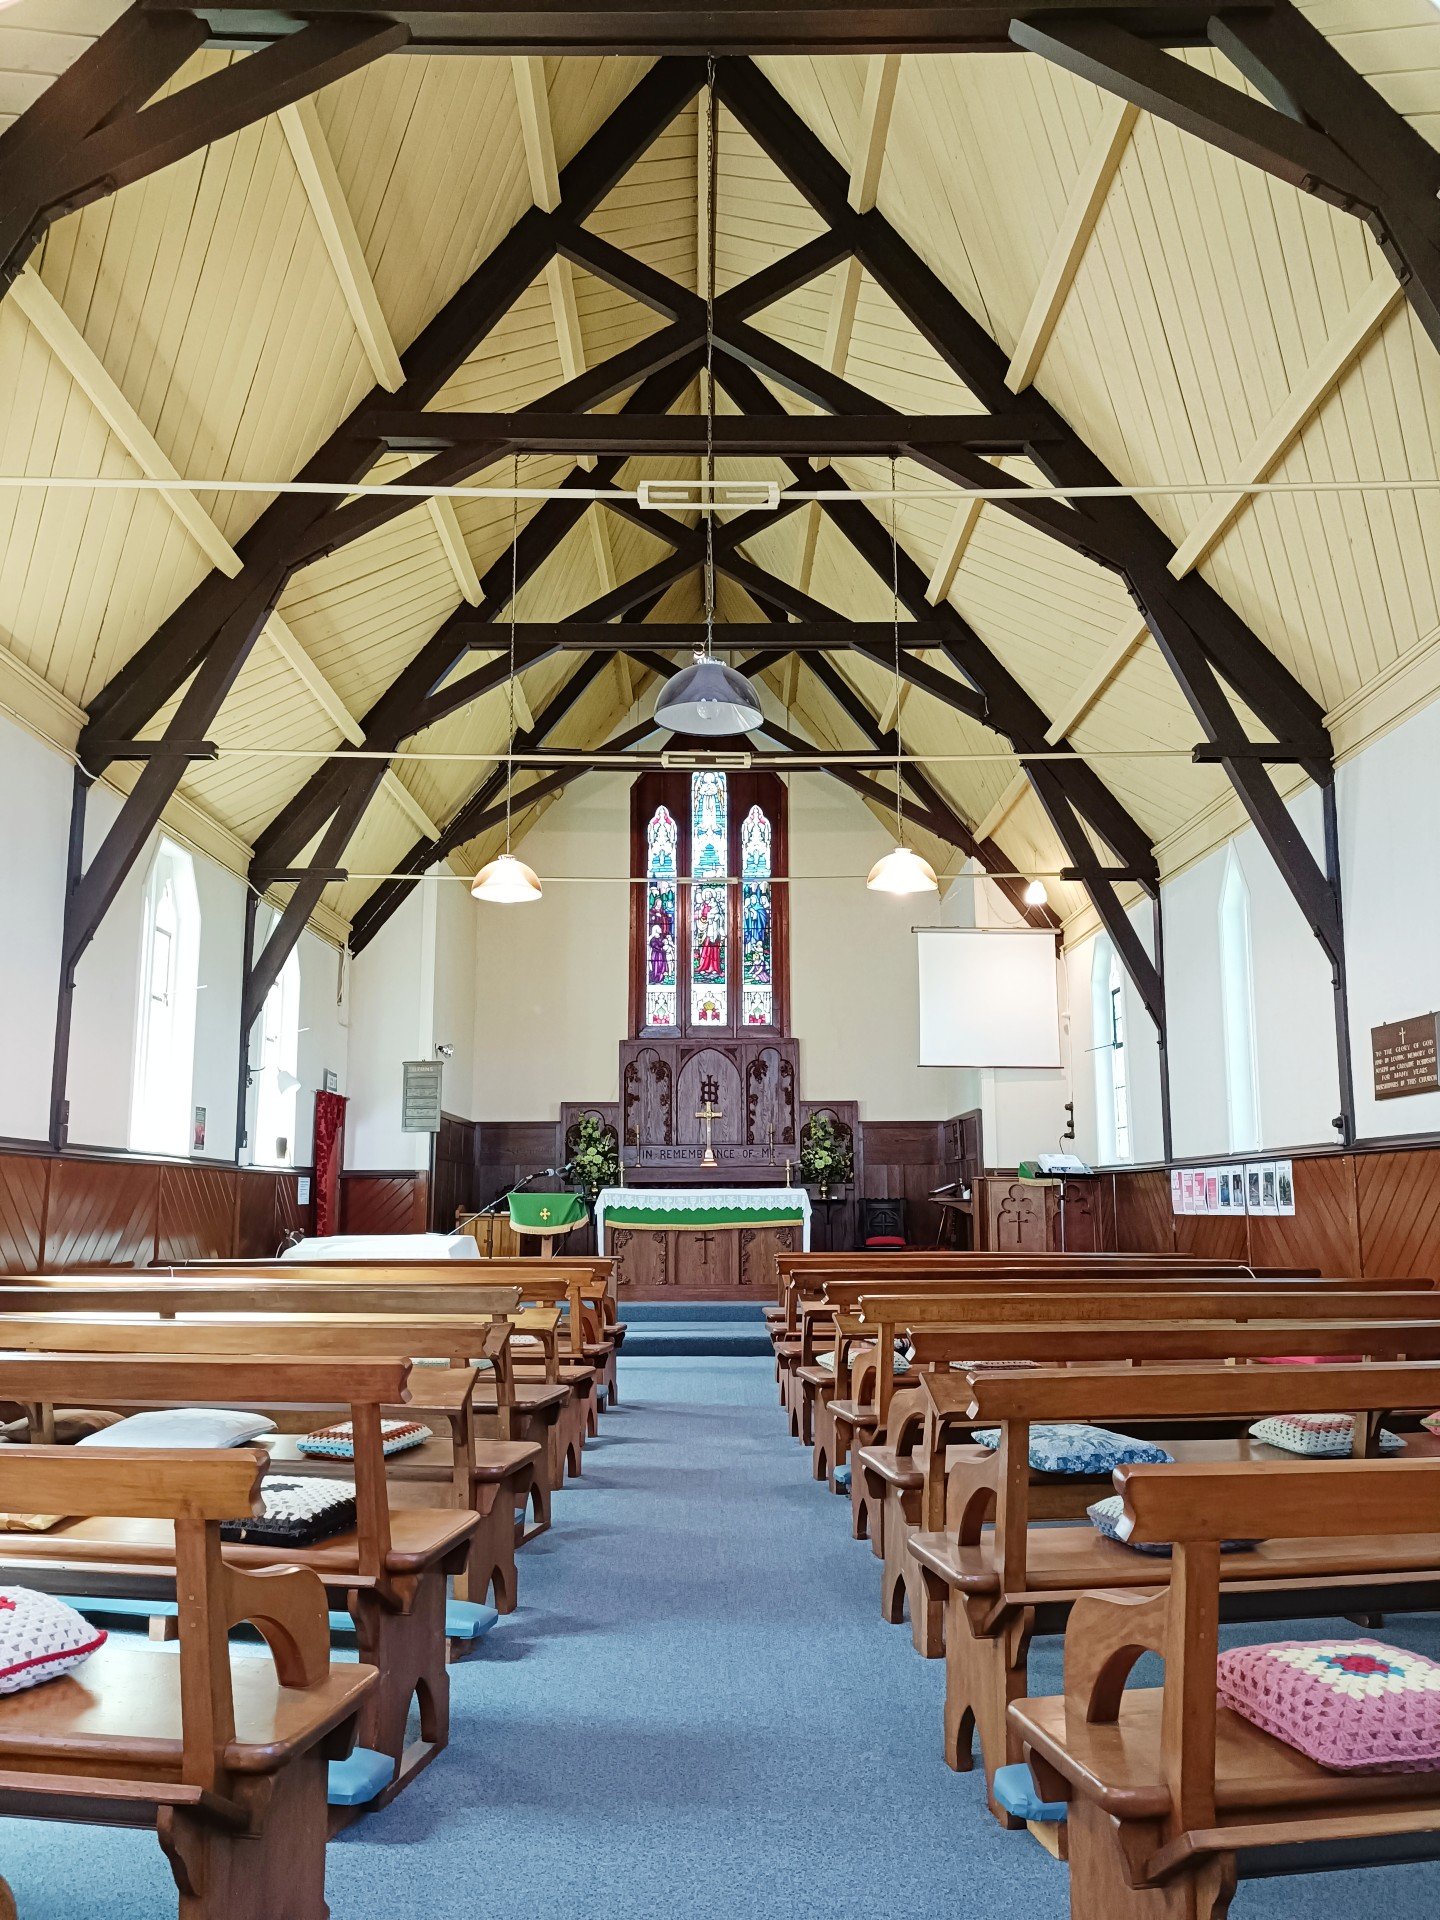 St Andrews Church interior